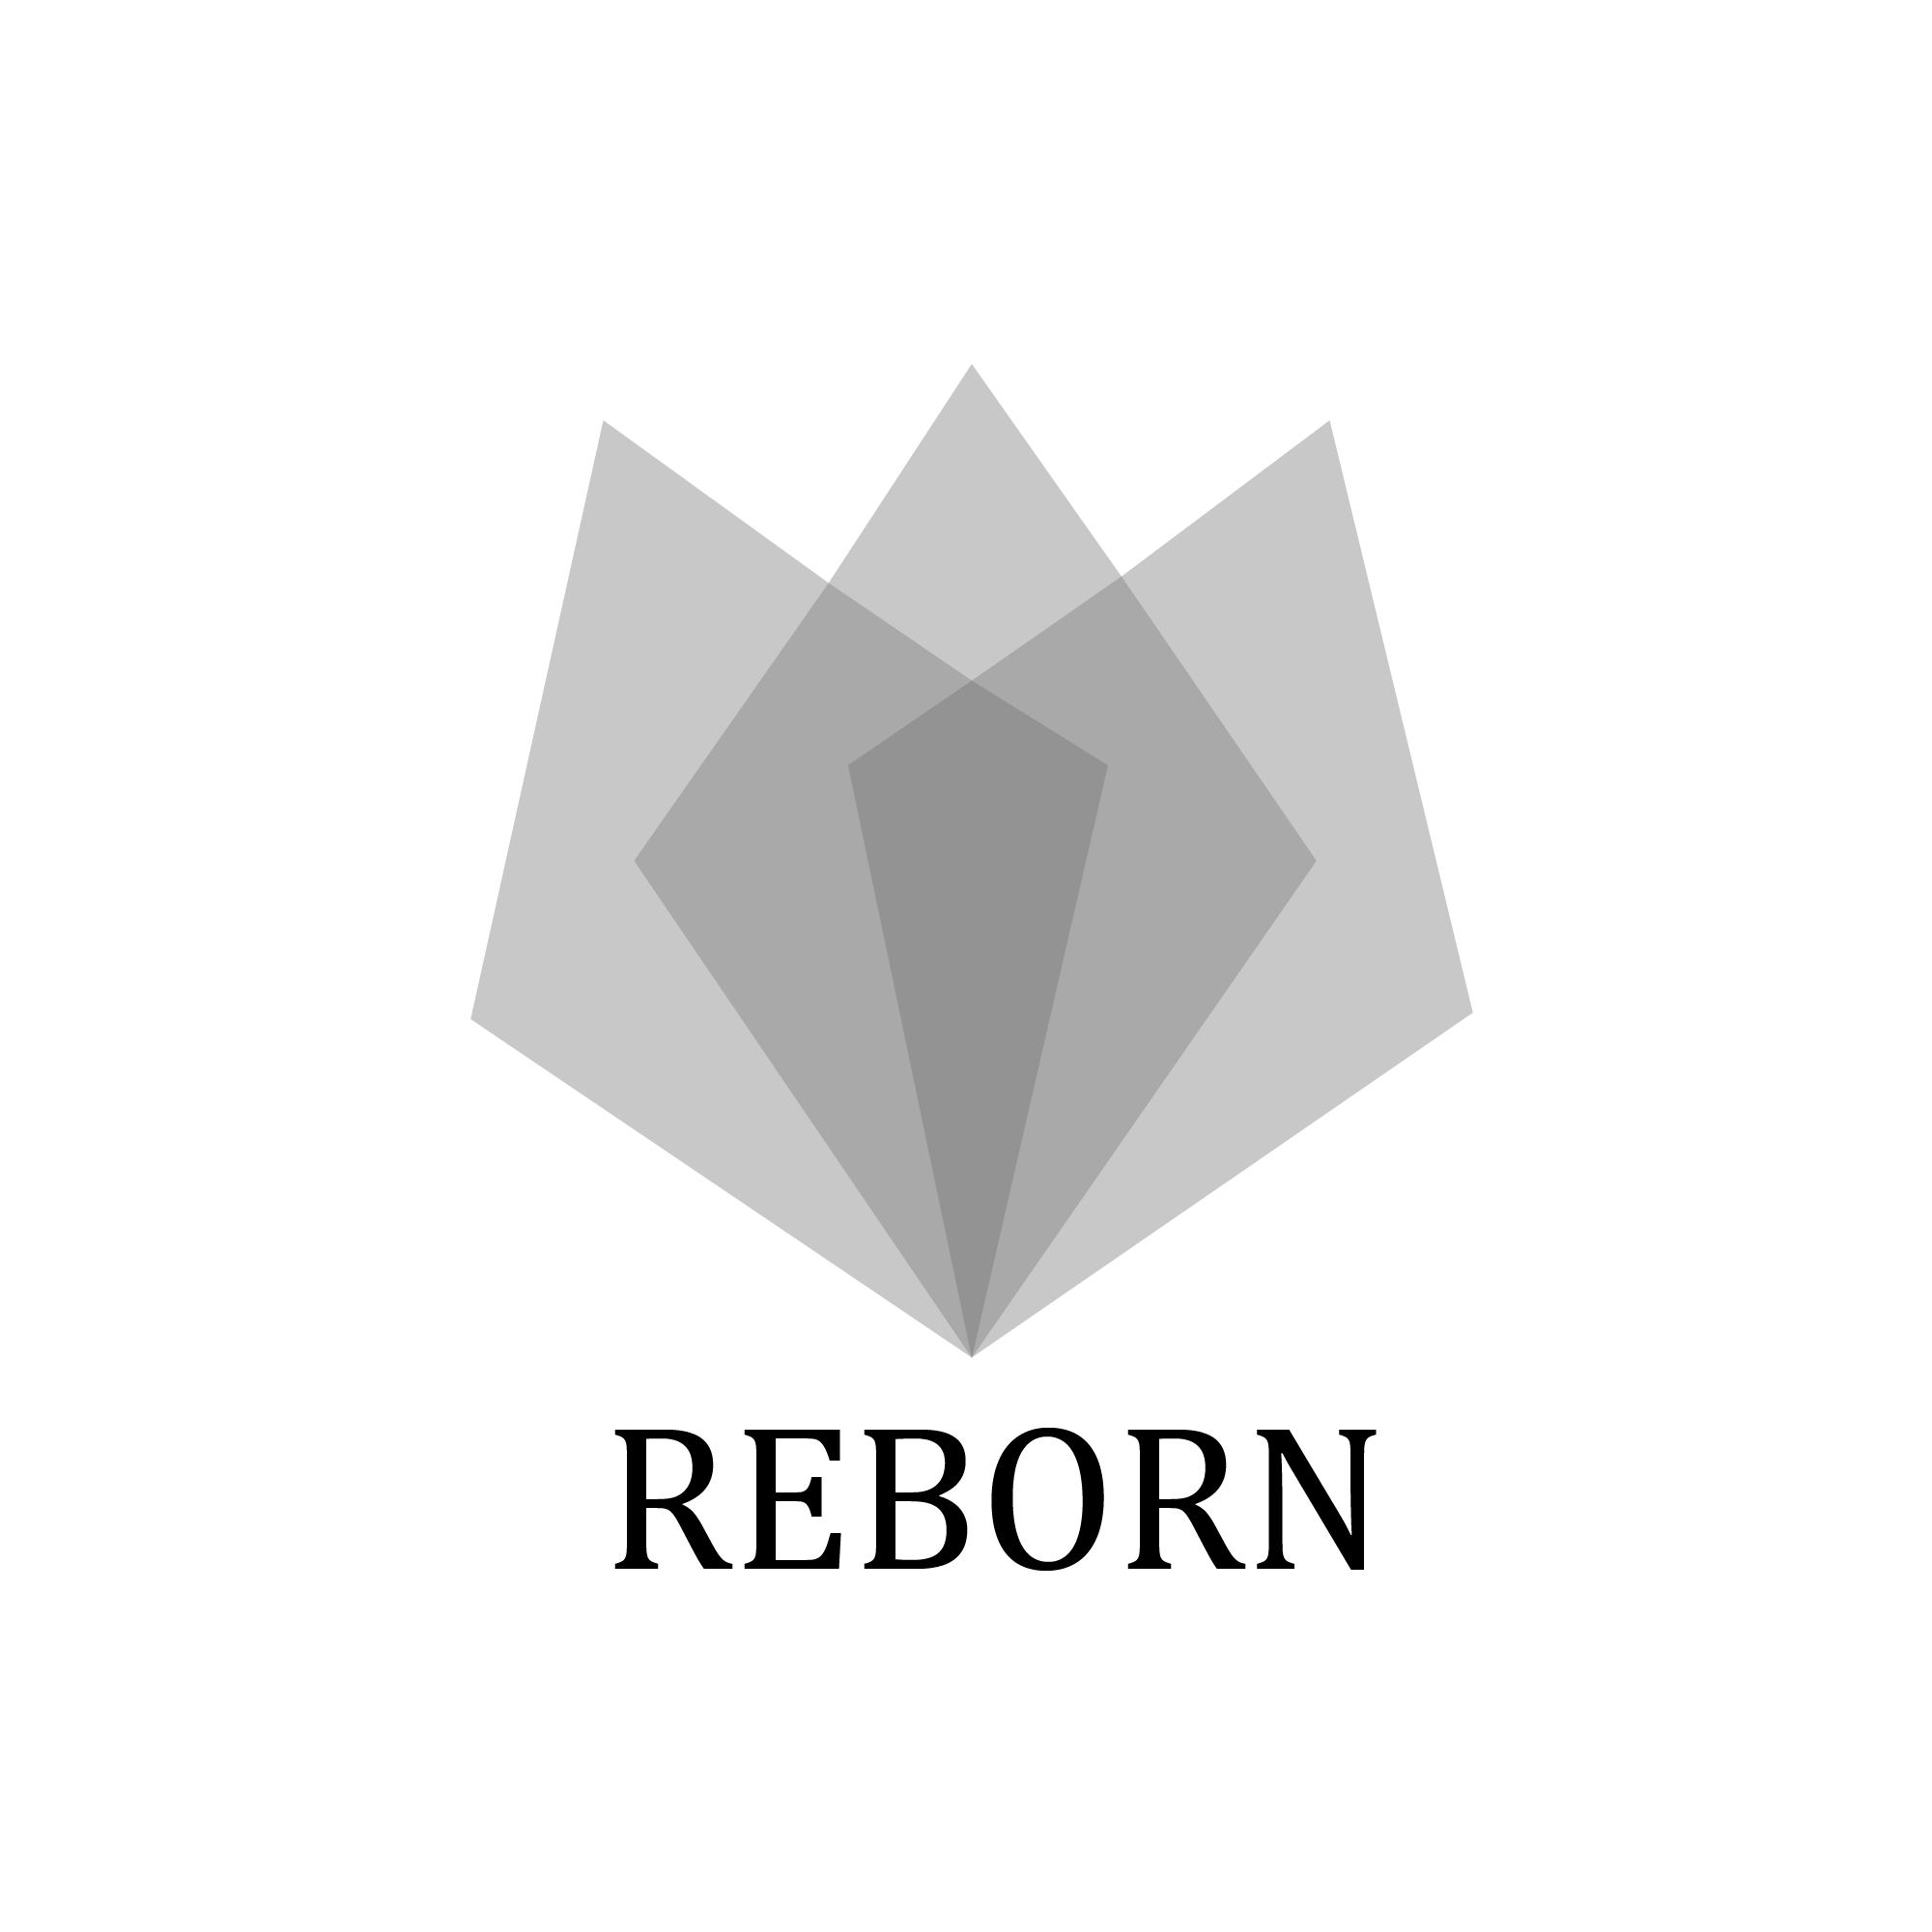 Reborn company logo preview image.